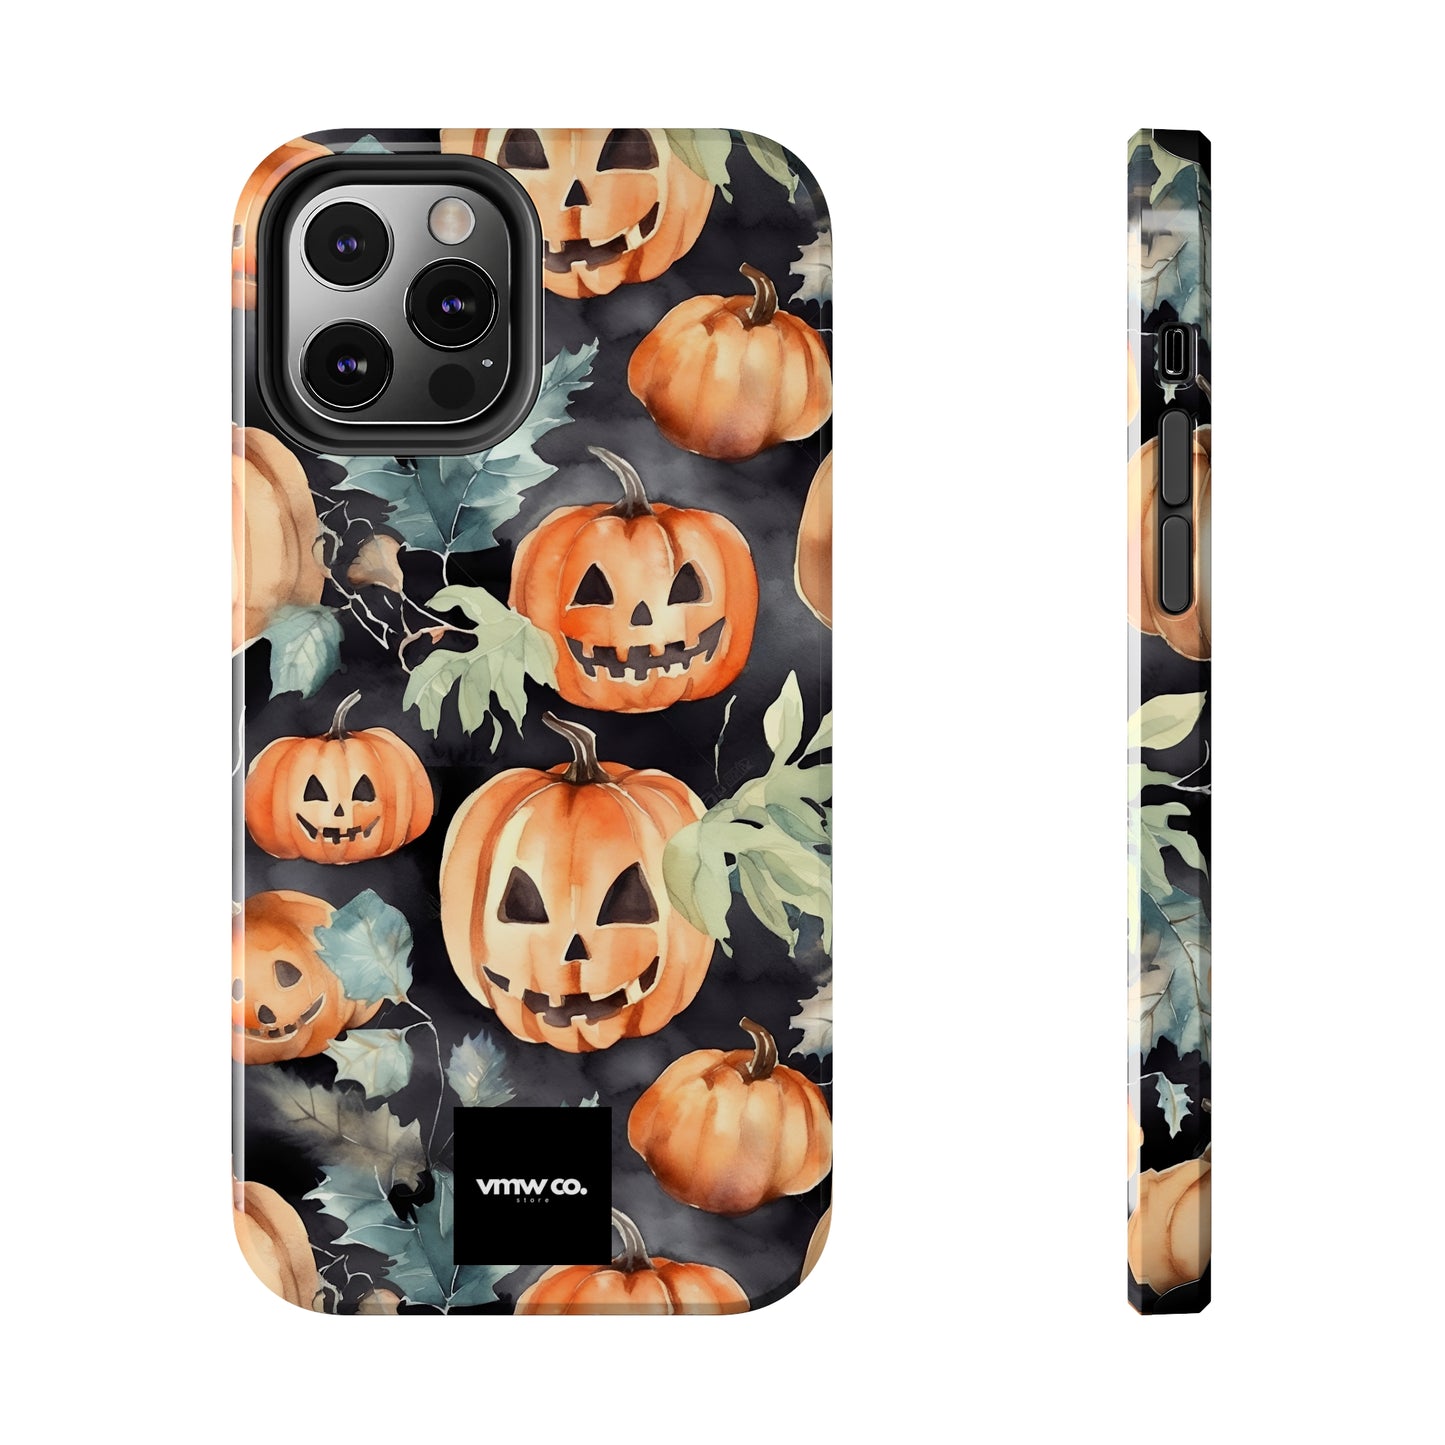 Pumpkin Black Orange iPhone Tough Phone Cases